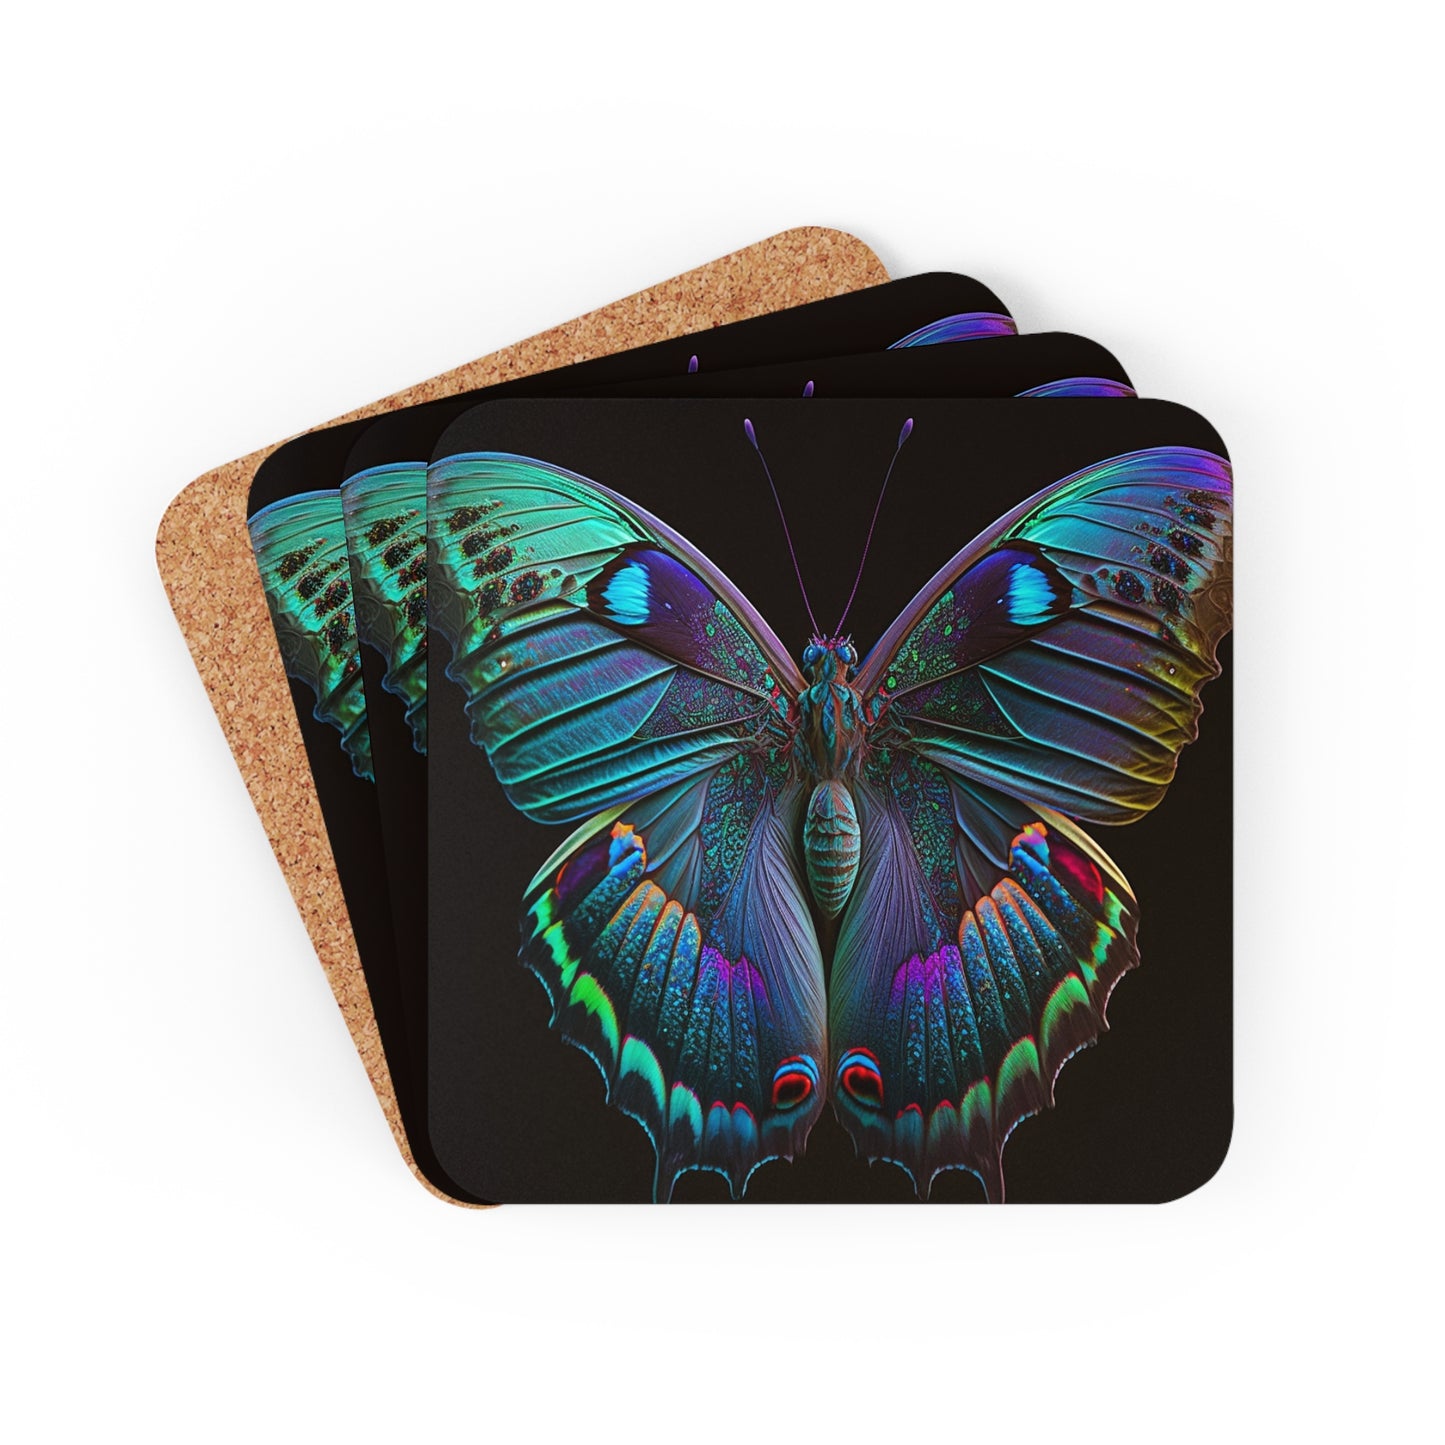 Corkwood Coaster Set Hue Neon Butterfly 4